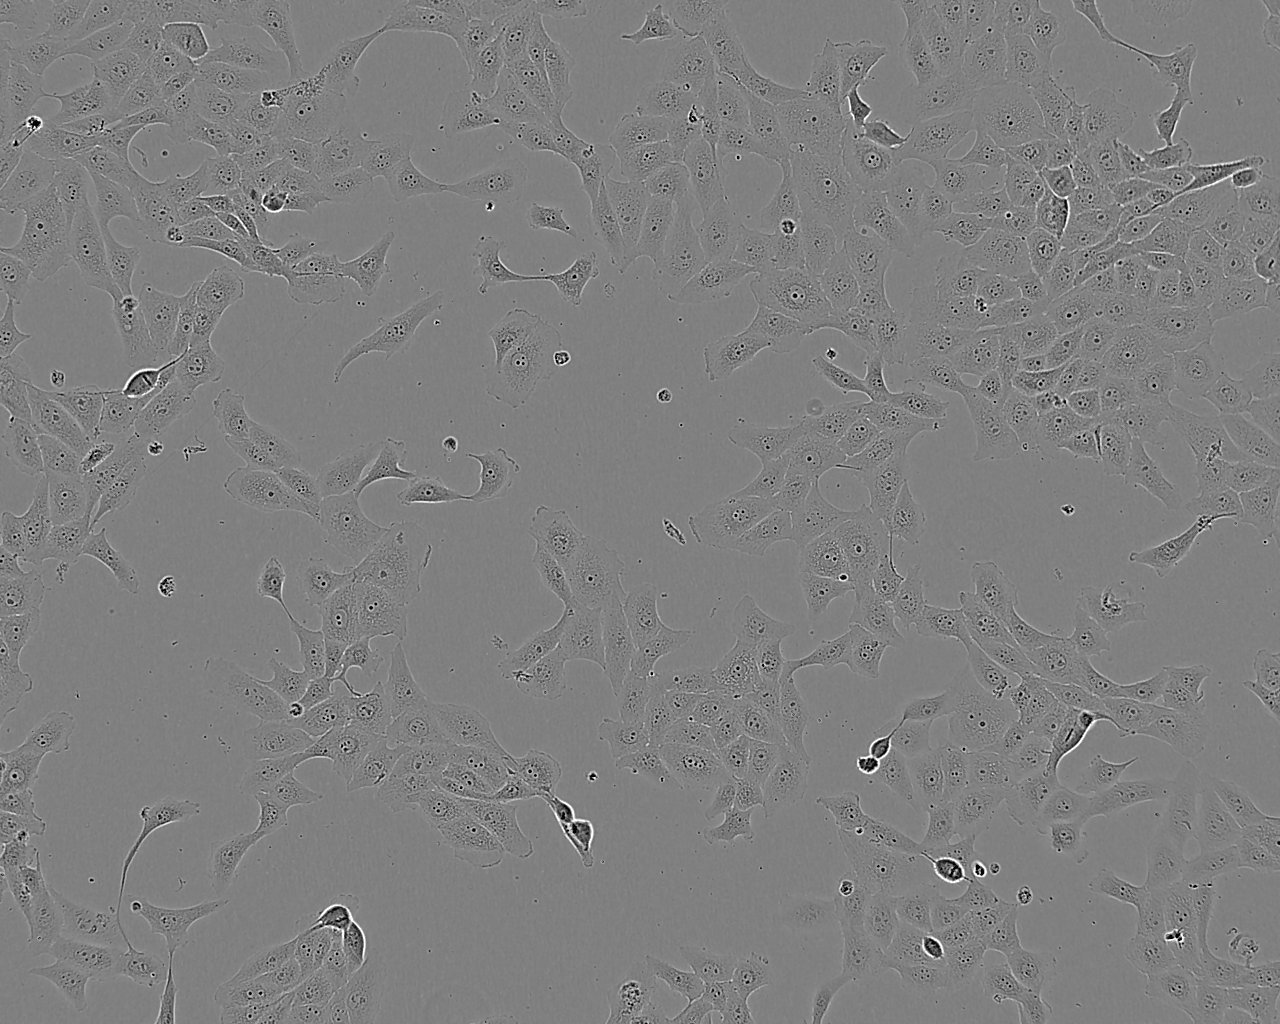 COLO 201 epithelioid cells人结直肠腺癌细胞系,COLO 201 epithelioid cells